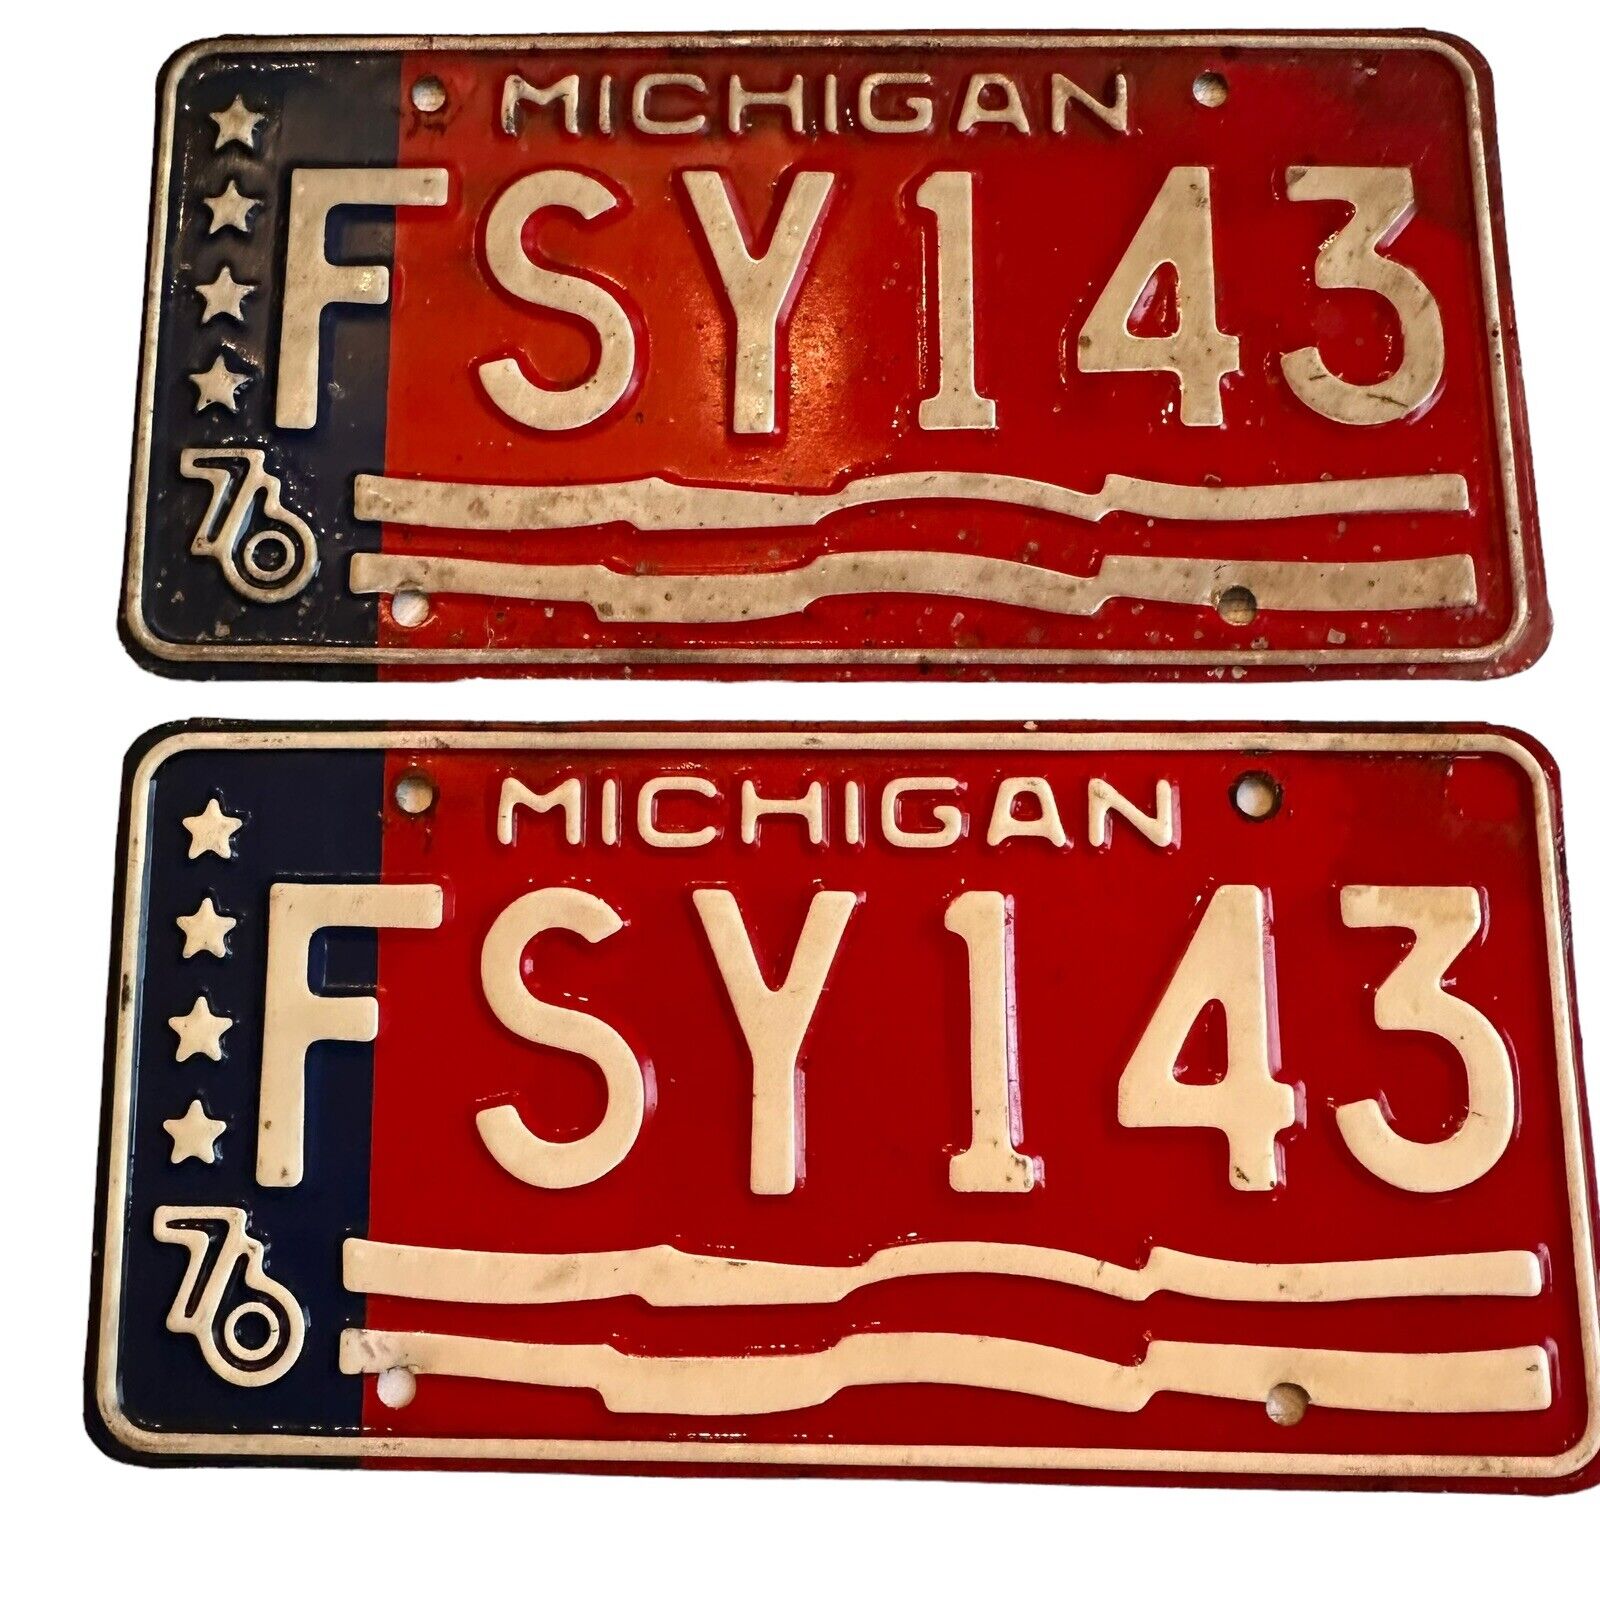 1976 Michigan License Plate Pair Bicentennial FSY 143 Nice Condition Both Plates